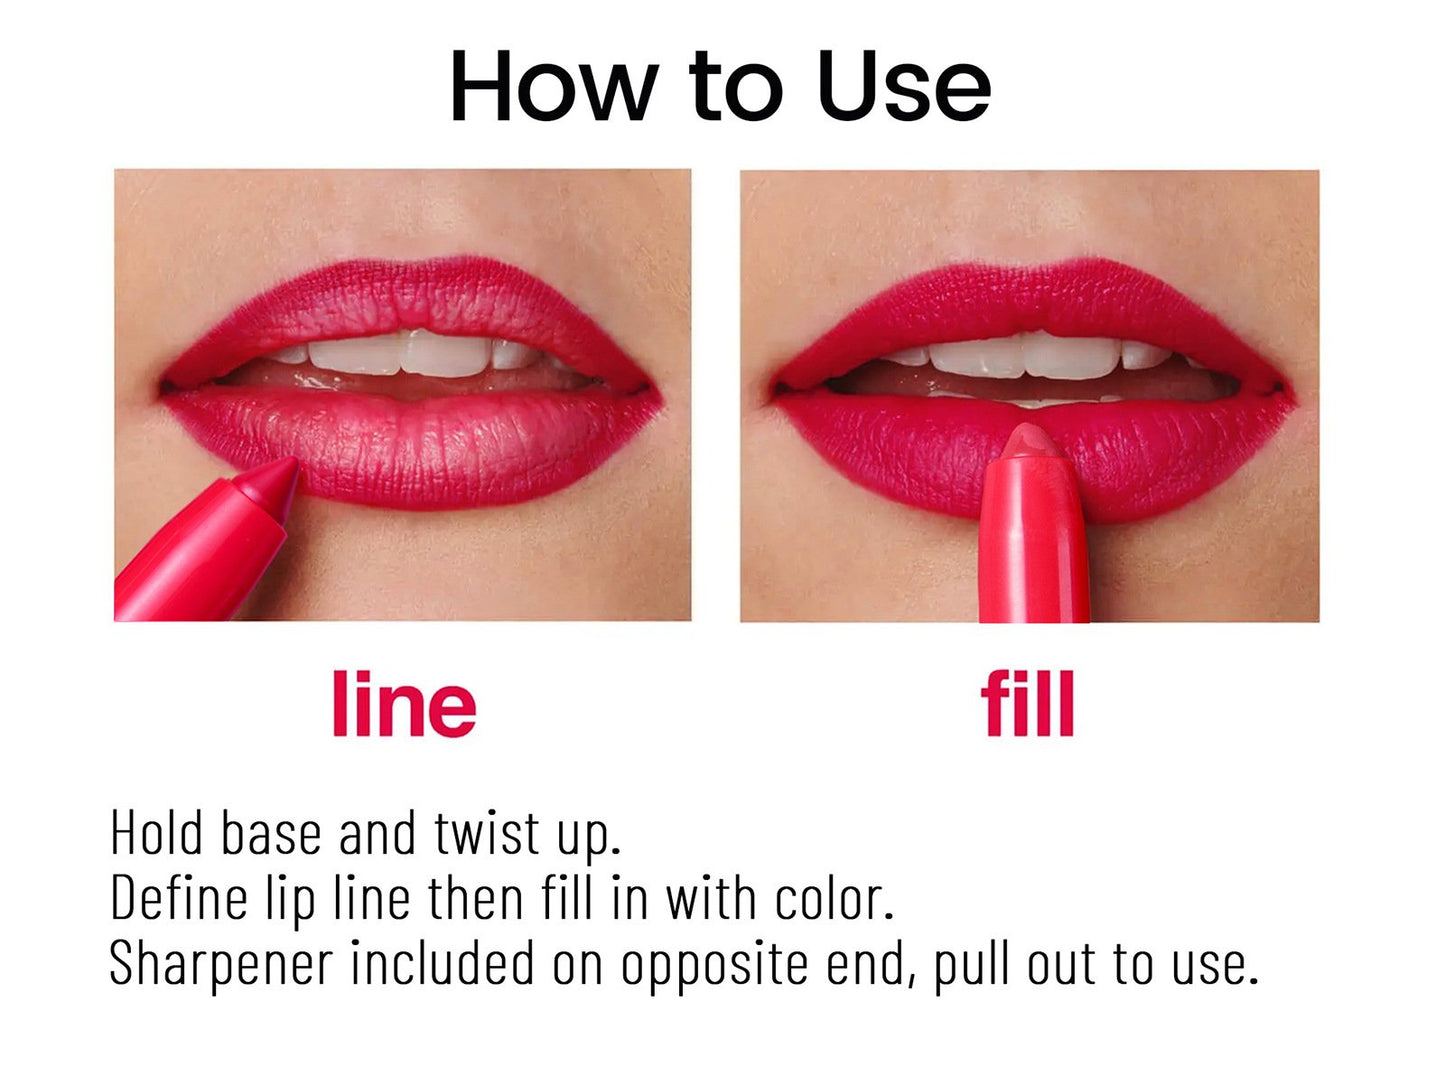 12 Color Rotating Sharpenable Matte Lipstick Pencils